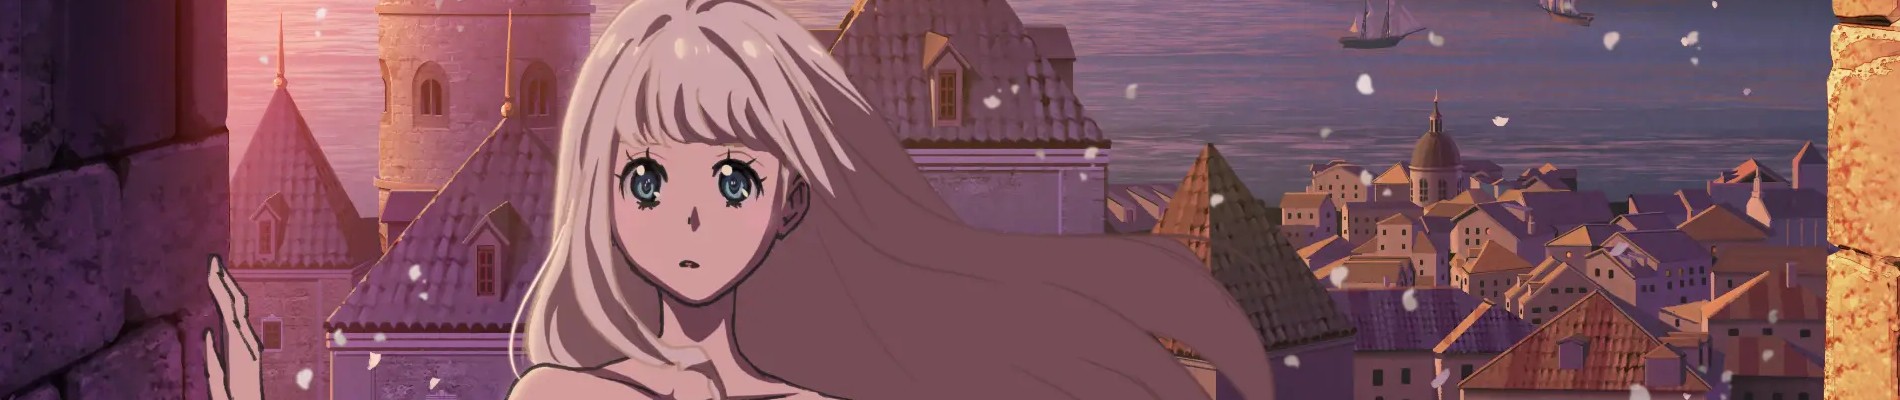 Kaizoku Oujo (Fena: Pirate Princess) · AniList